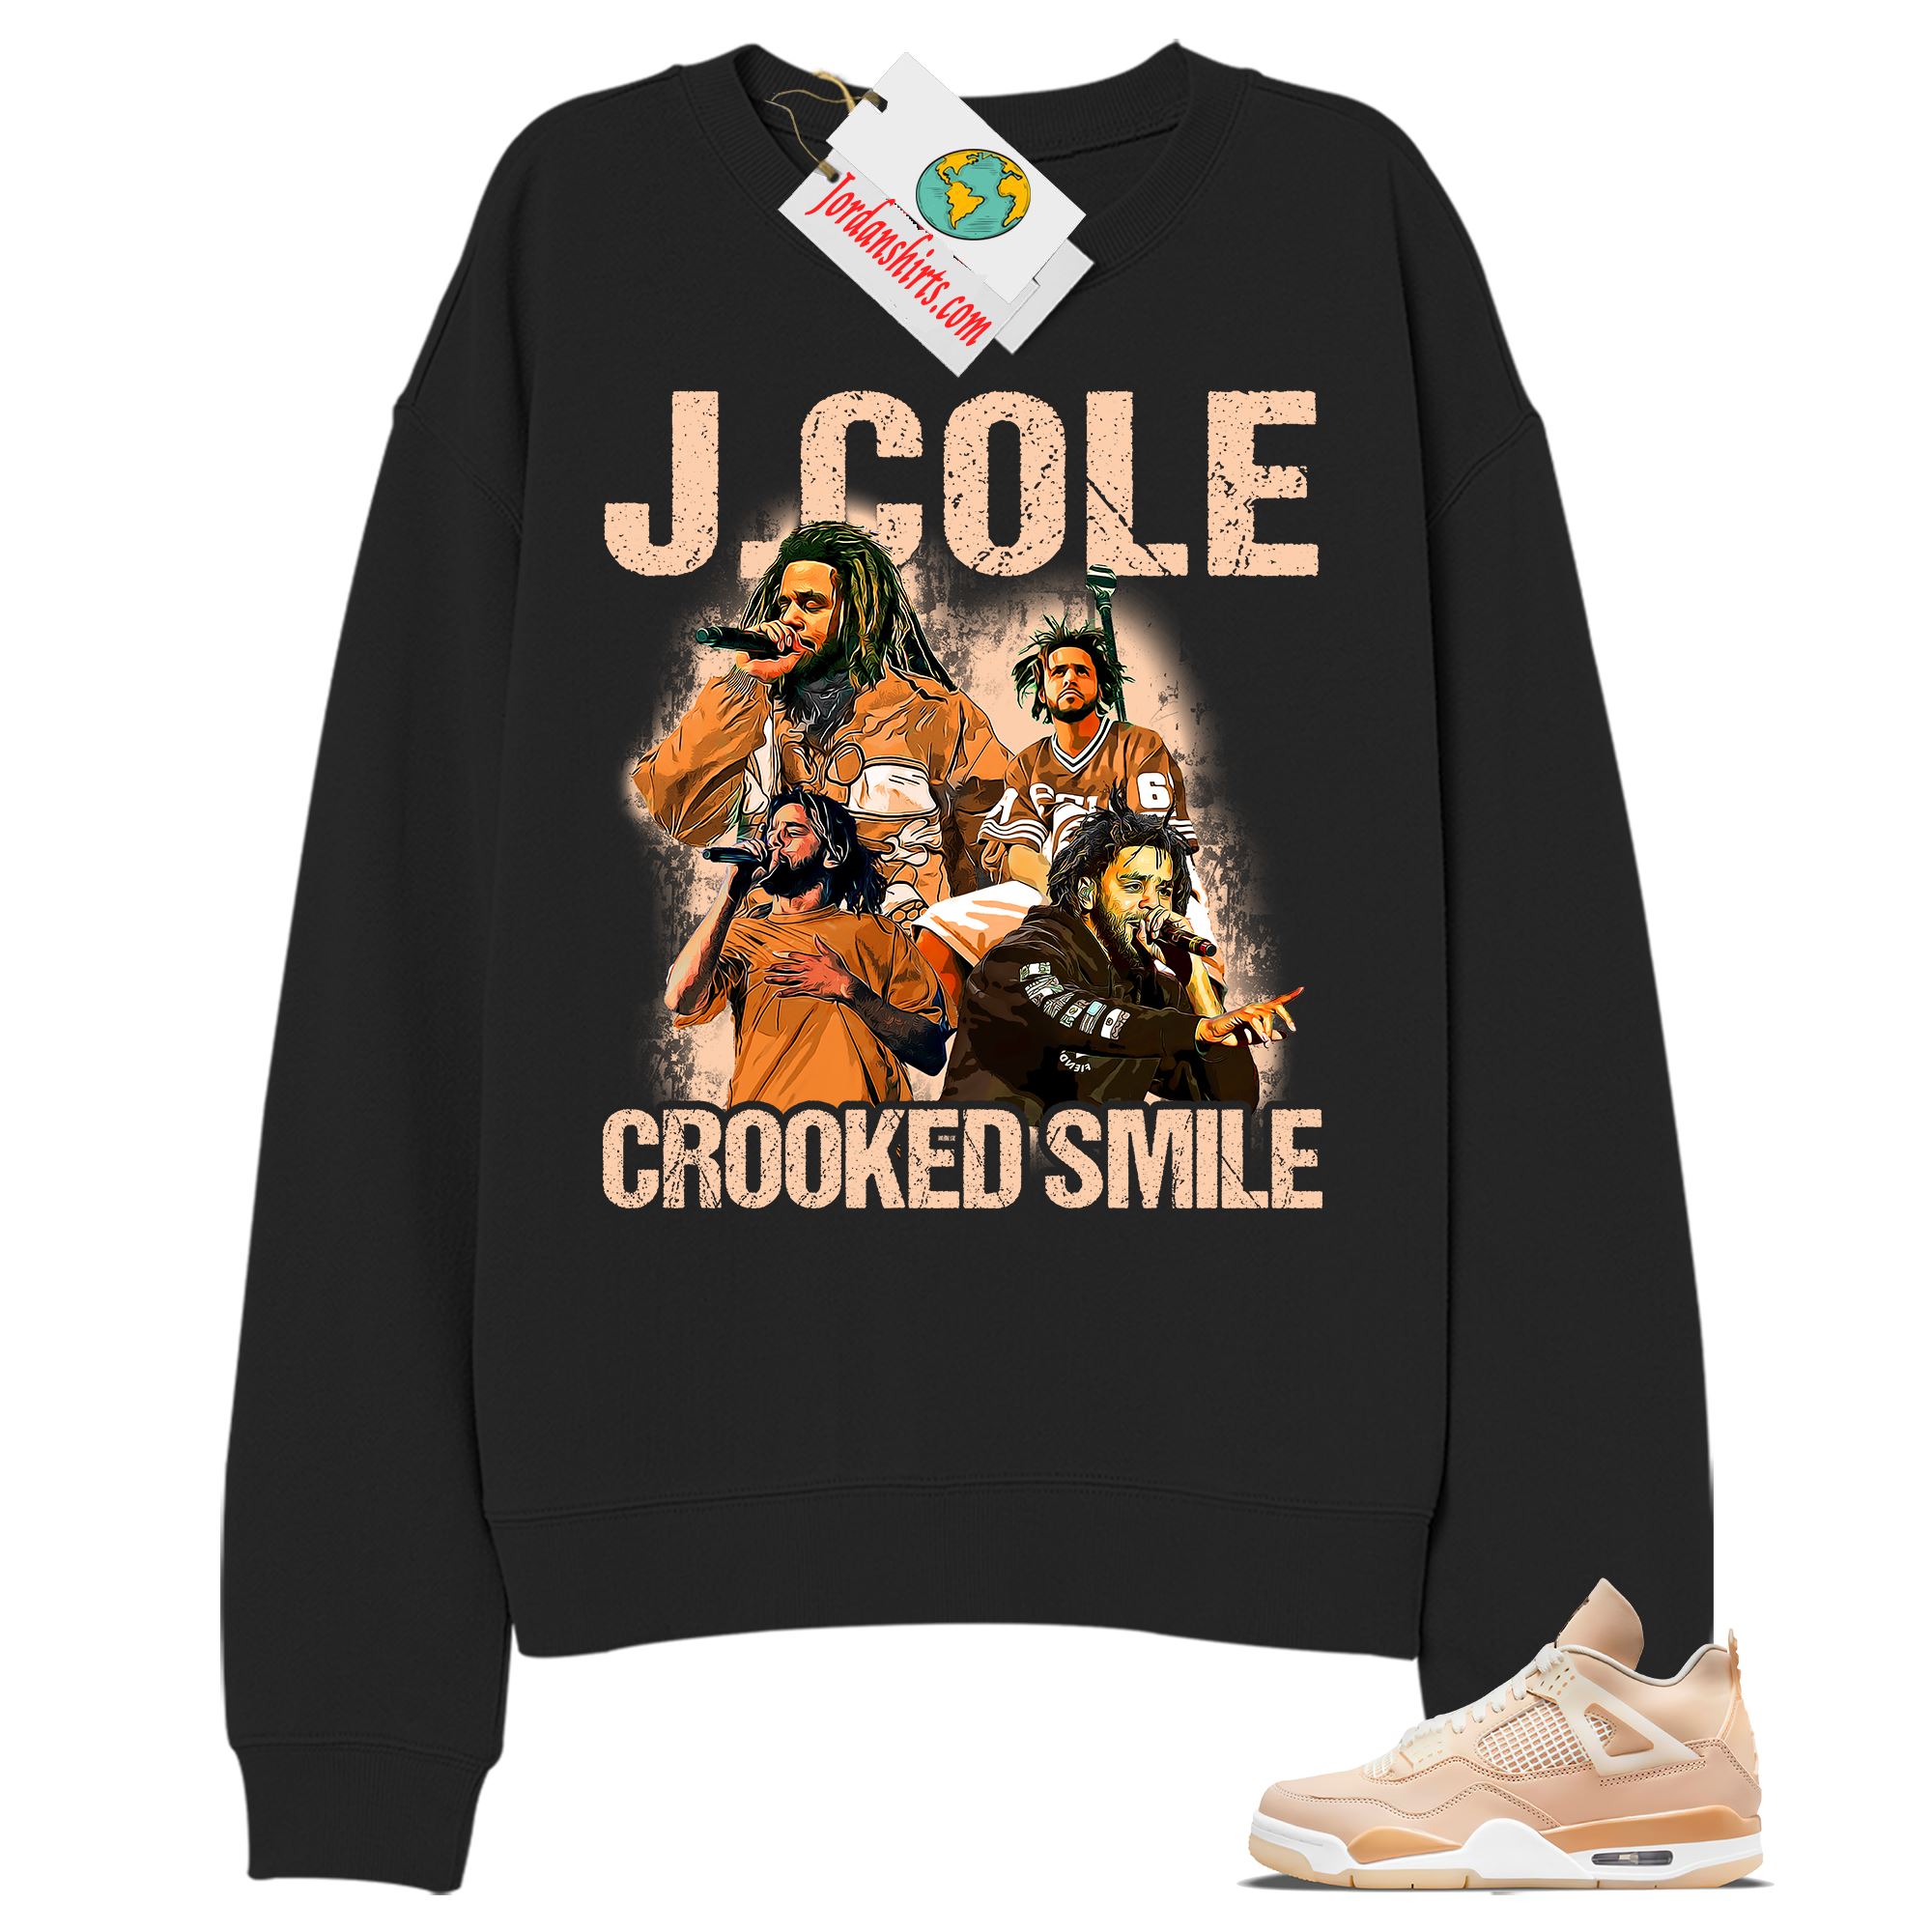 Jordan 4 Sweatshirt, J Cole Bootleg Vintage Raptee Black Sweatshirt Air Jordan 4 Shimmer 4s Plus Size Up To 5xl